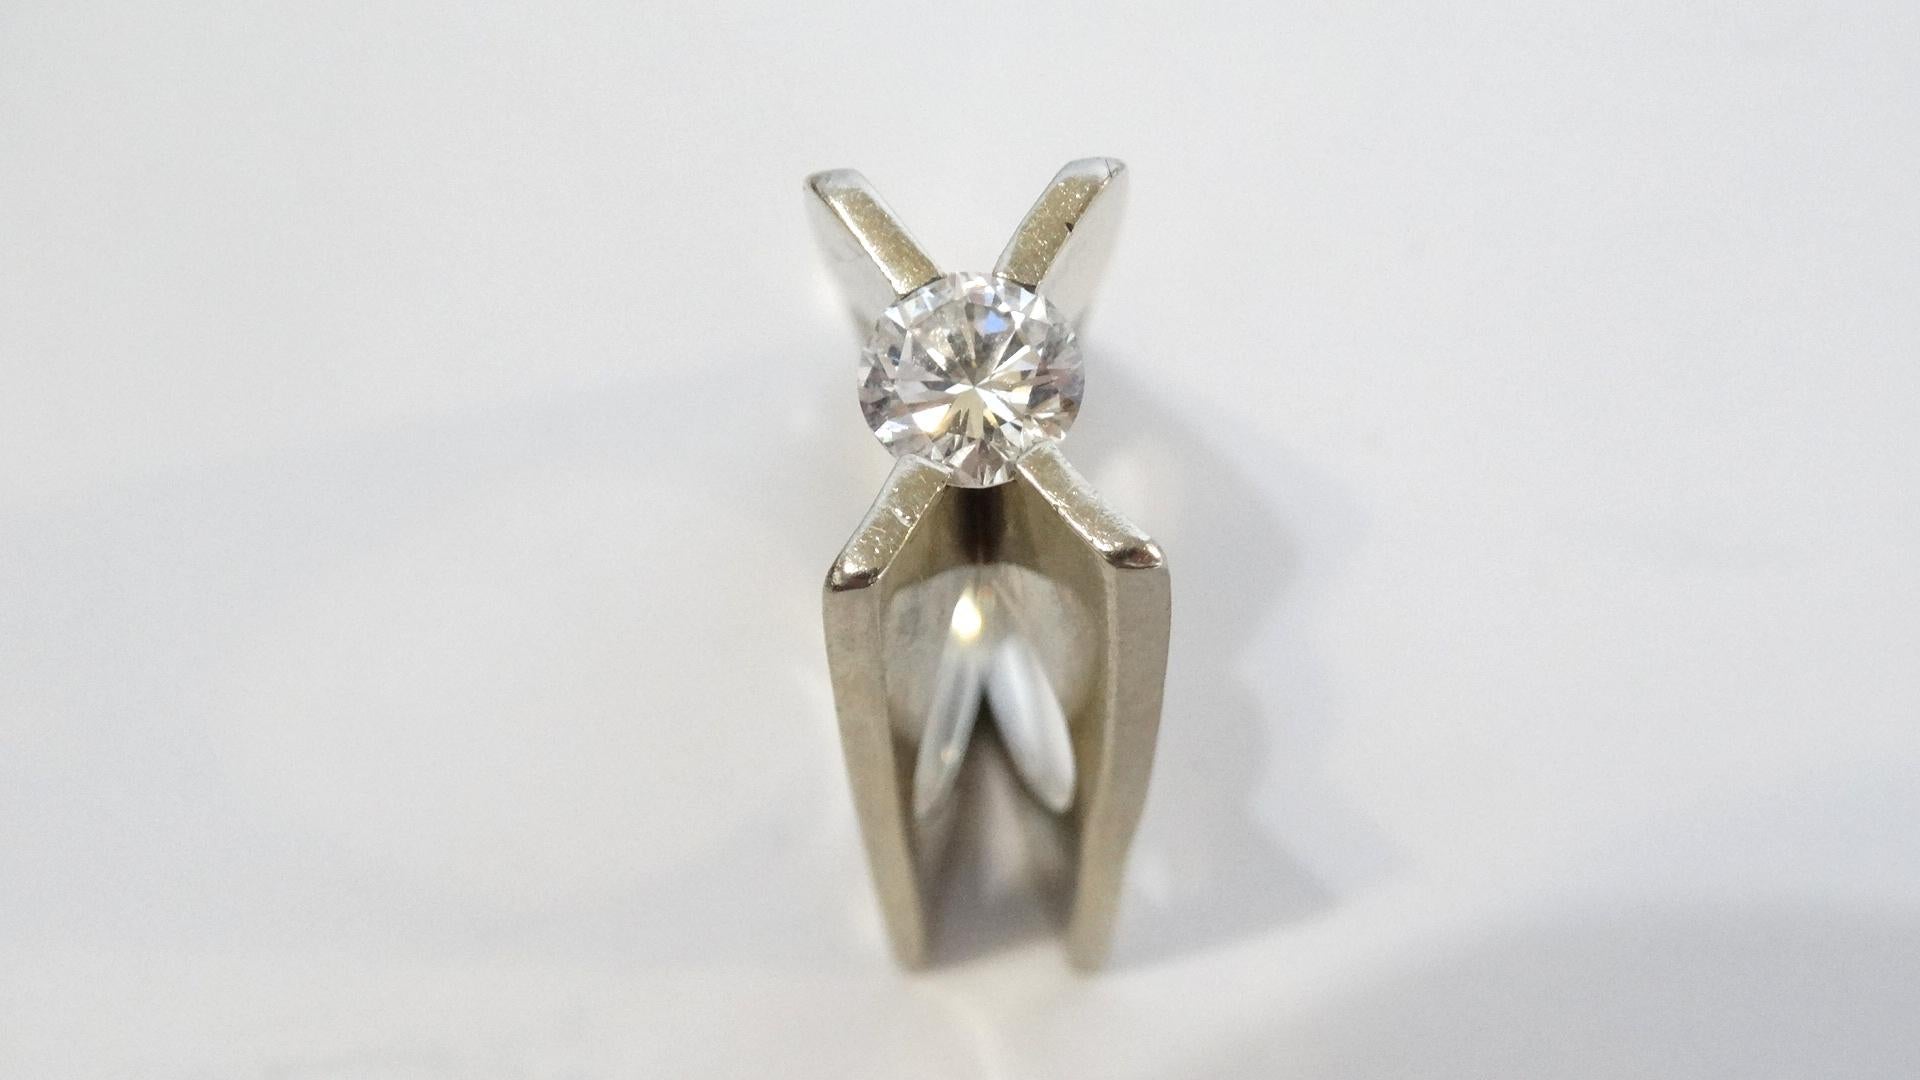 Contemporary Whitt for Georg Jensen 1 Carat Diamond Ring